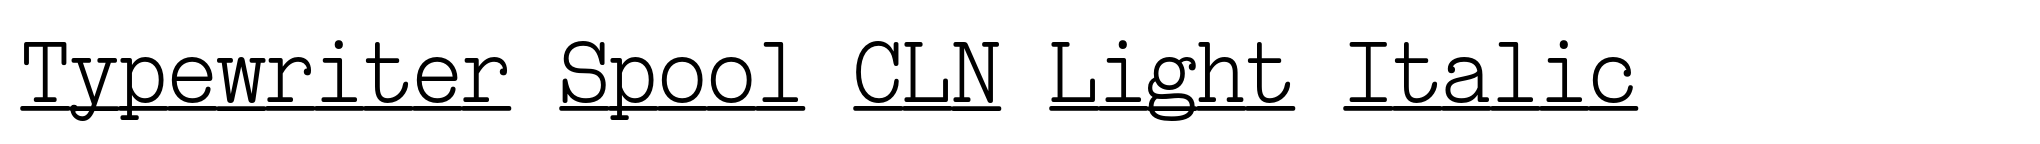 Typewriter Spool CLN Light Italic image